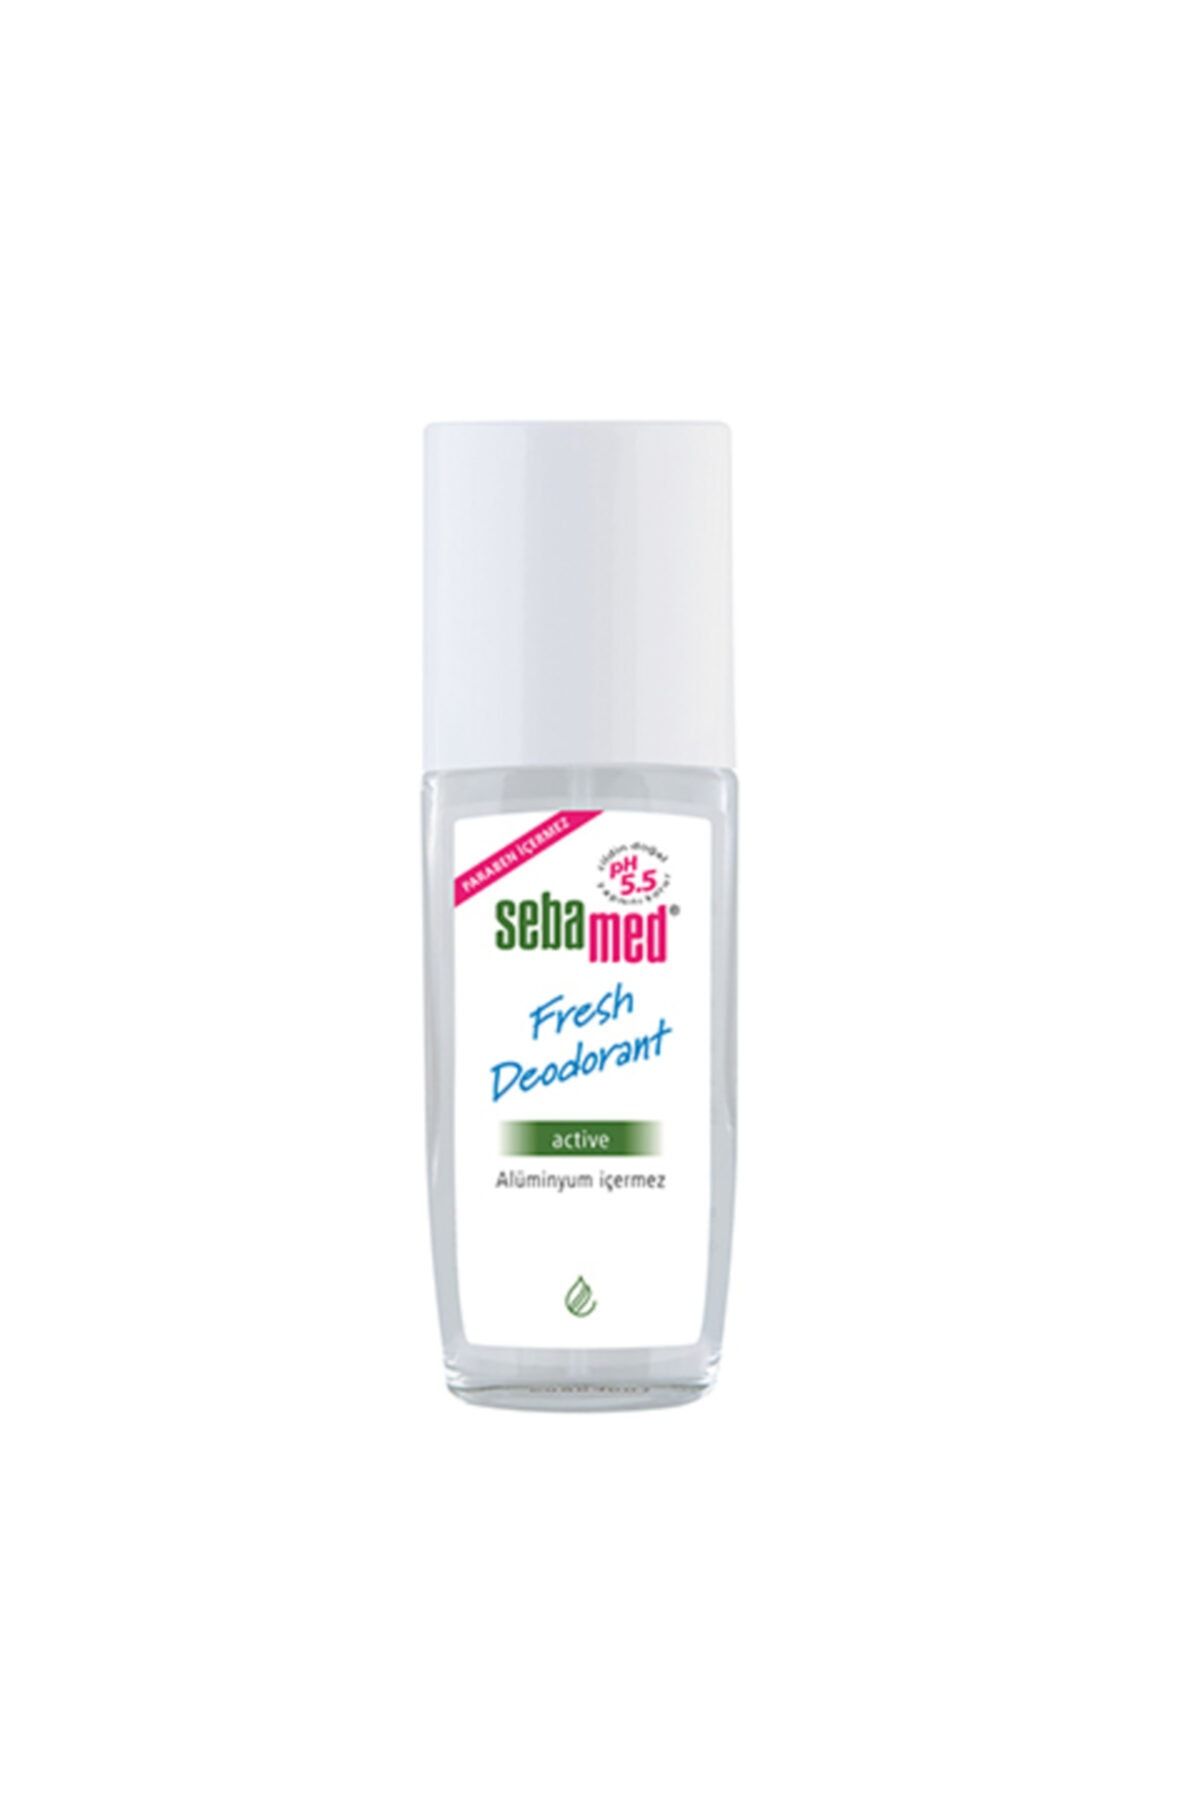 Sebamed Fresh Active Deodorant 75 ml 9526SEB27904